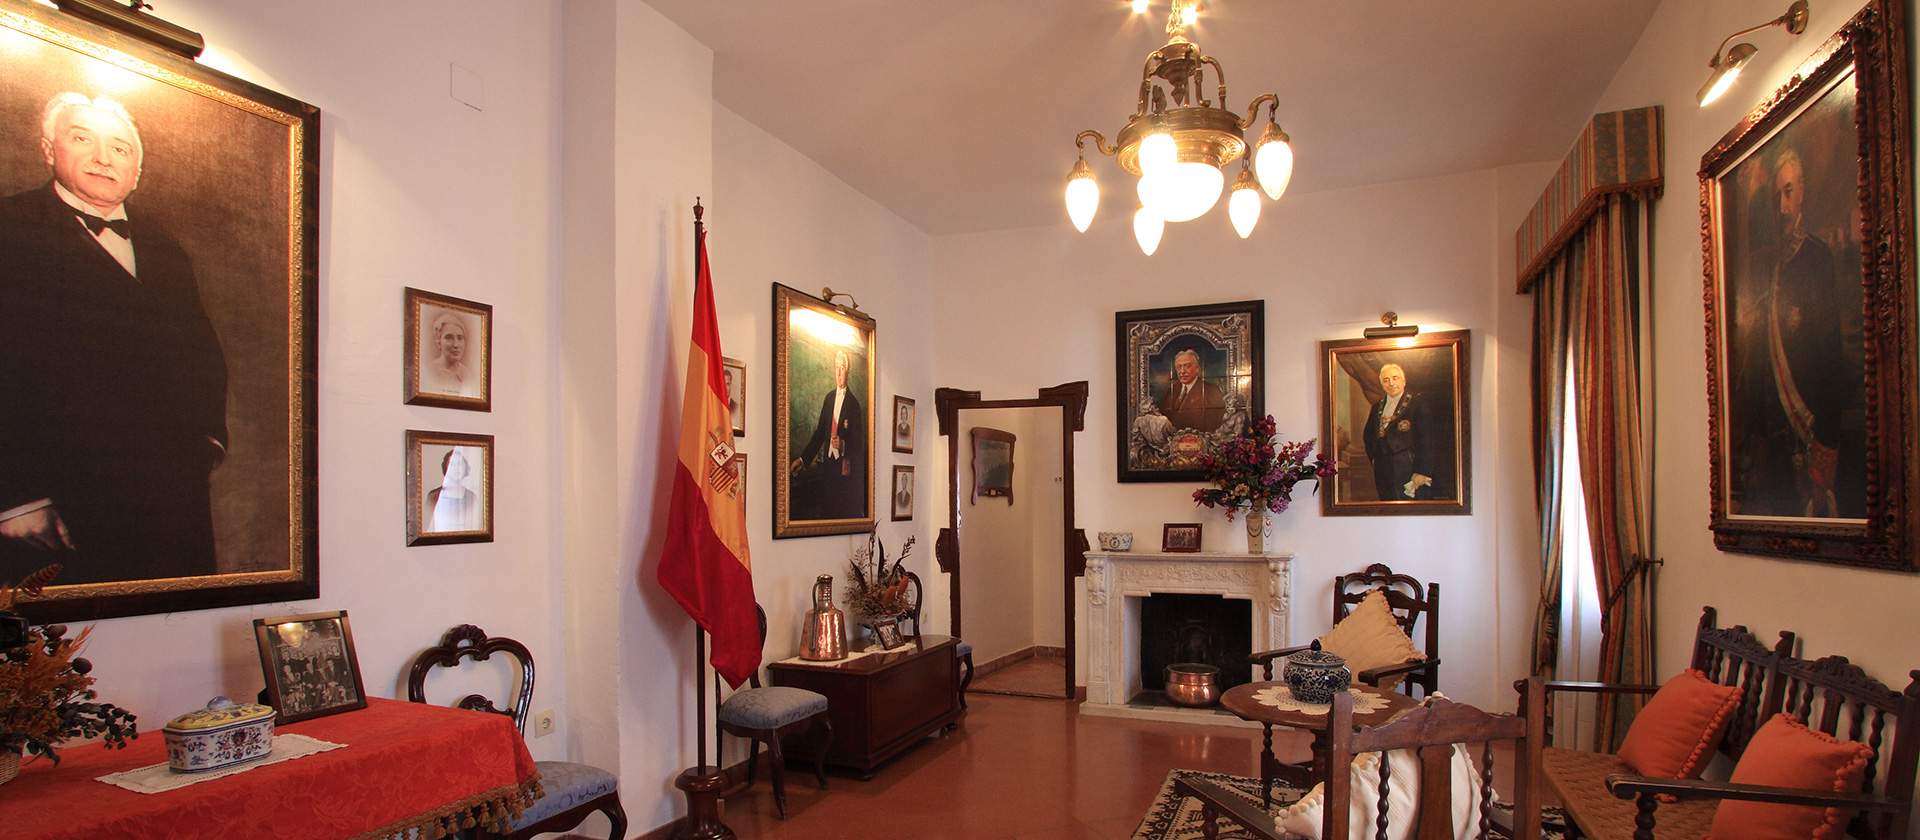 Museo-Niceto-Alcal-Zamora-12.jpg